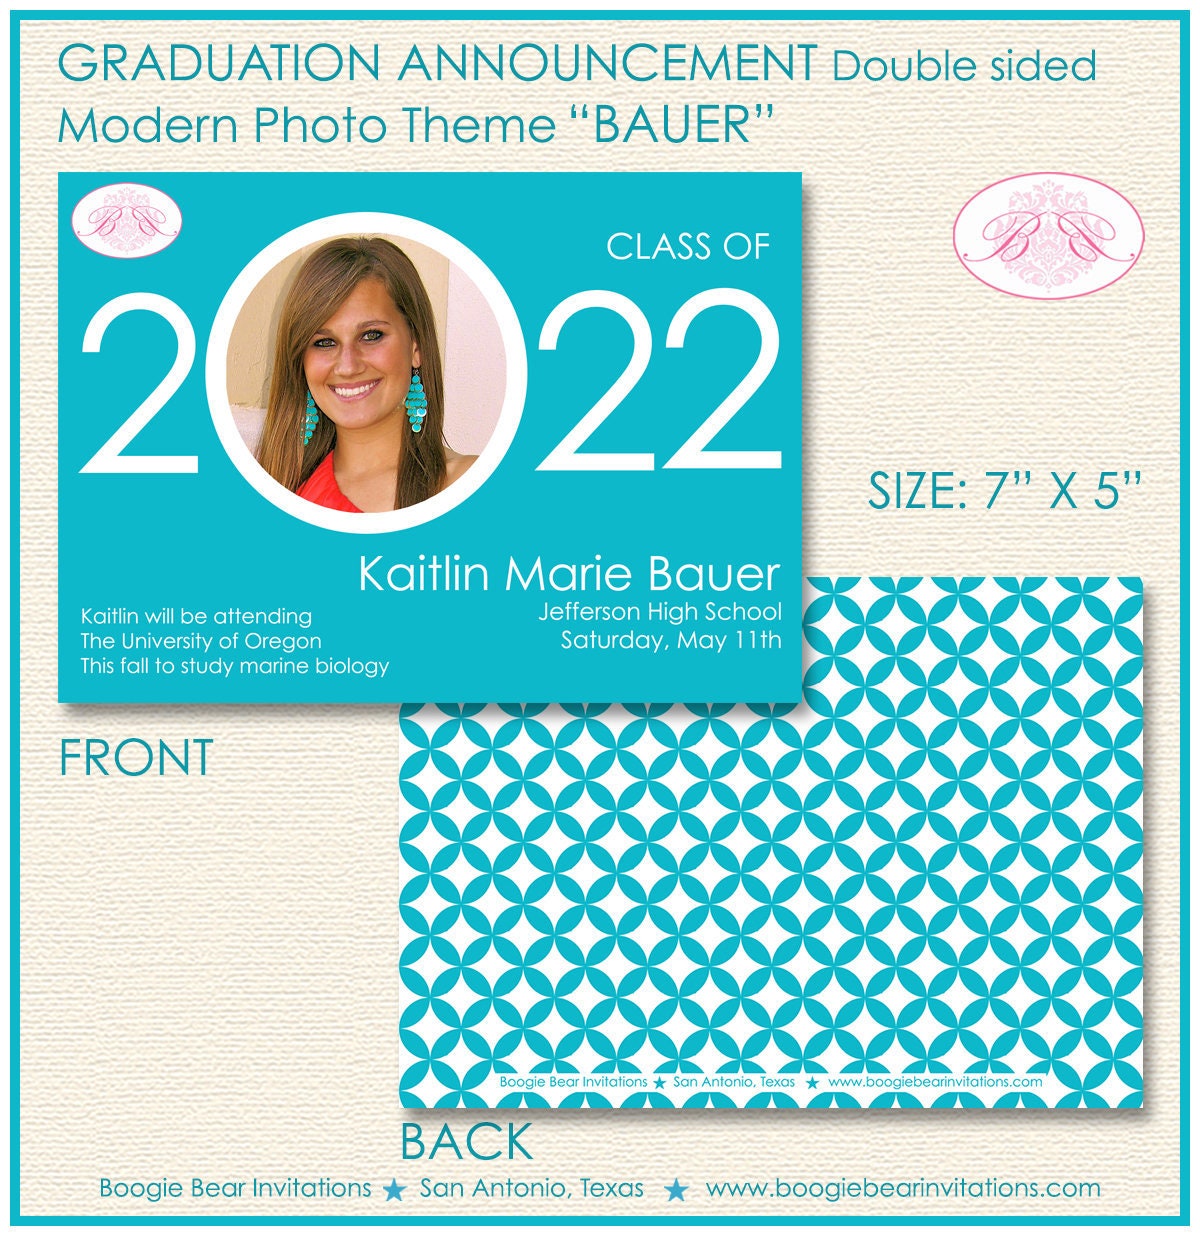 Modern Photo Graduation Announcement High School College 2022 2023 2024 2025 Boogie Bear Invitations Bauer Theme Paperless Printable Printed